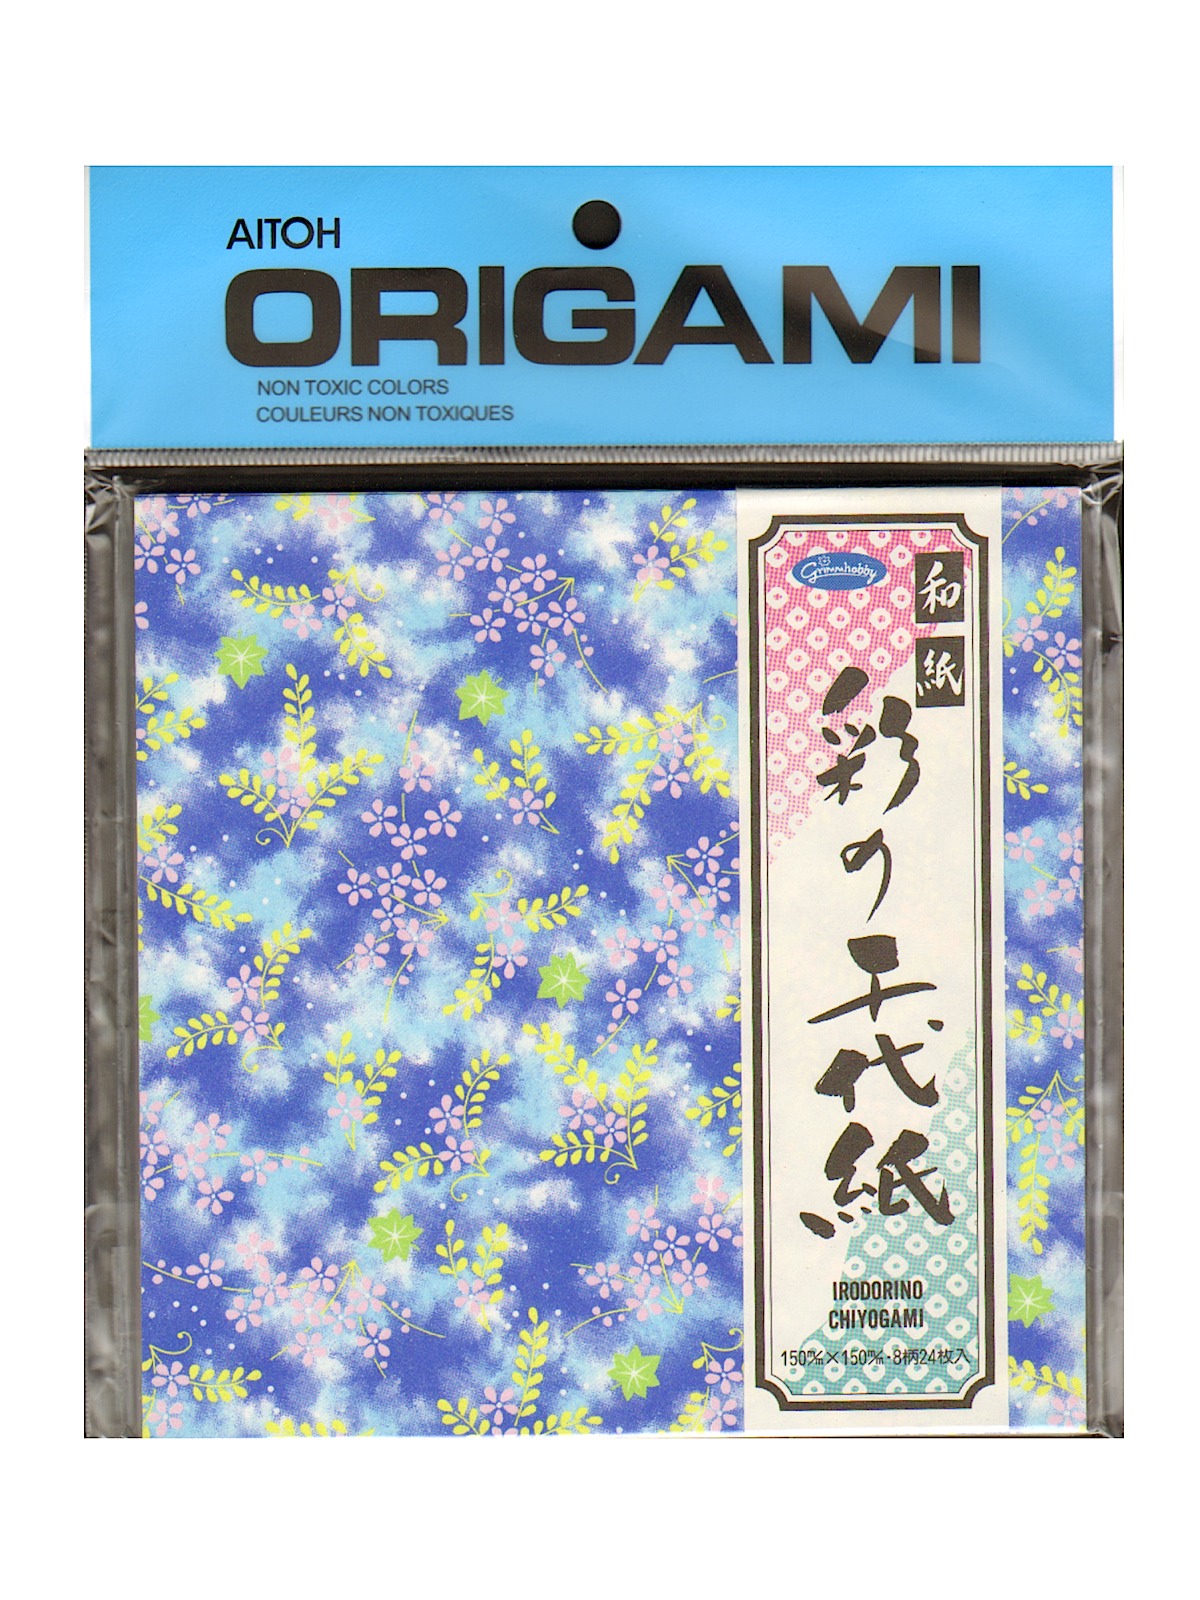 Origami Paper 5 7 8 In. X 5 7 8 In. Irodorino Chiyogami Washi 24 Sheets